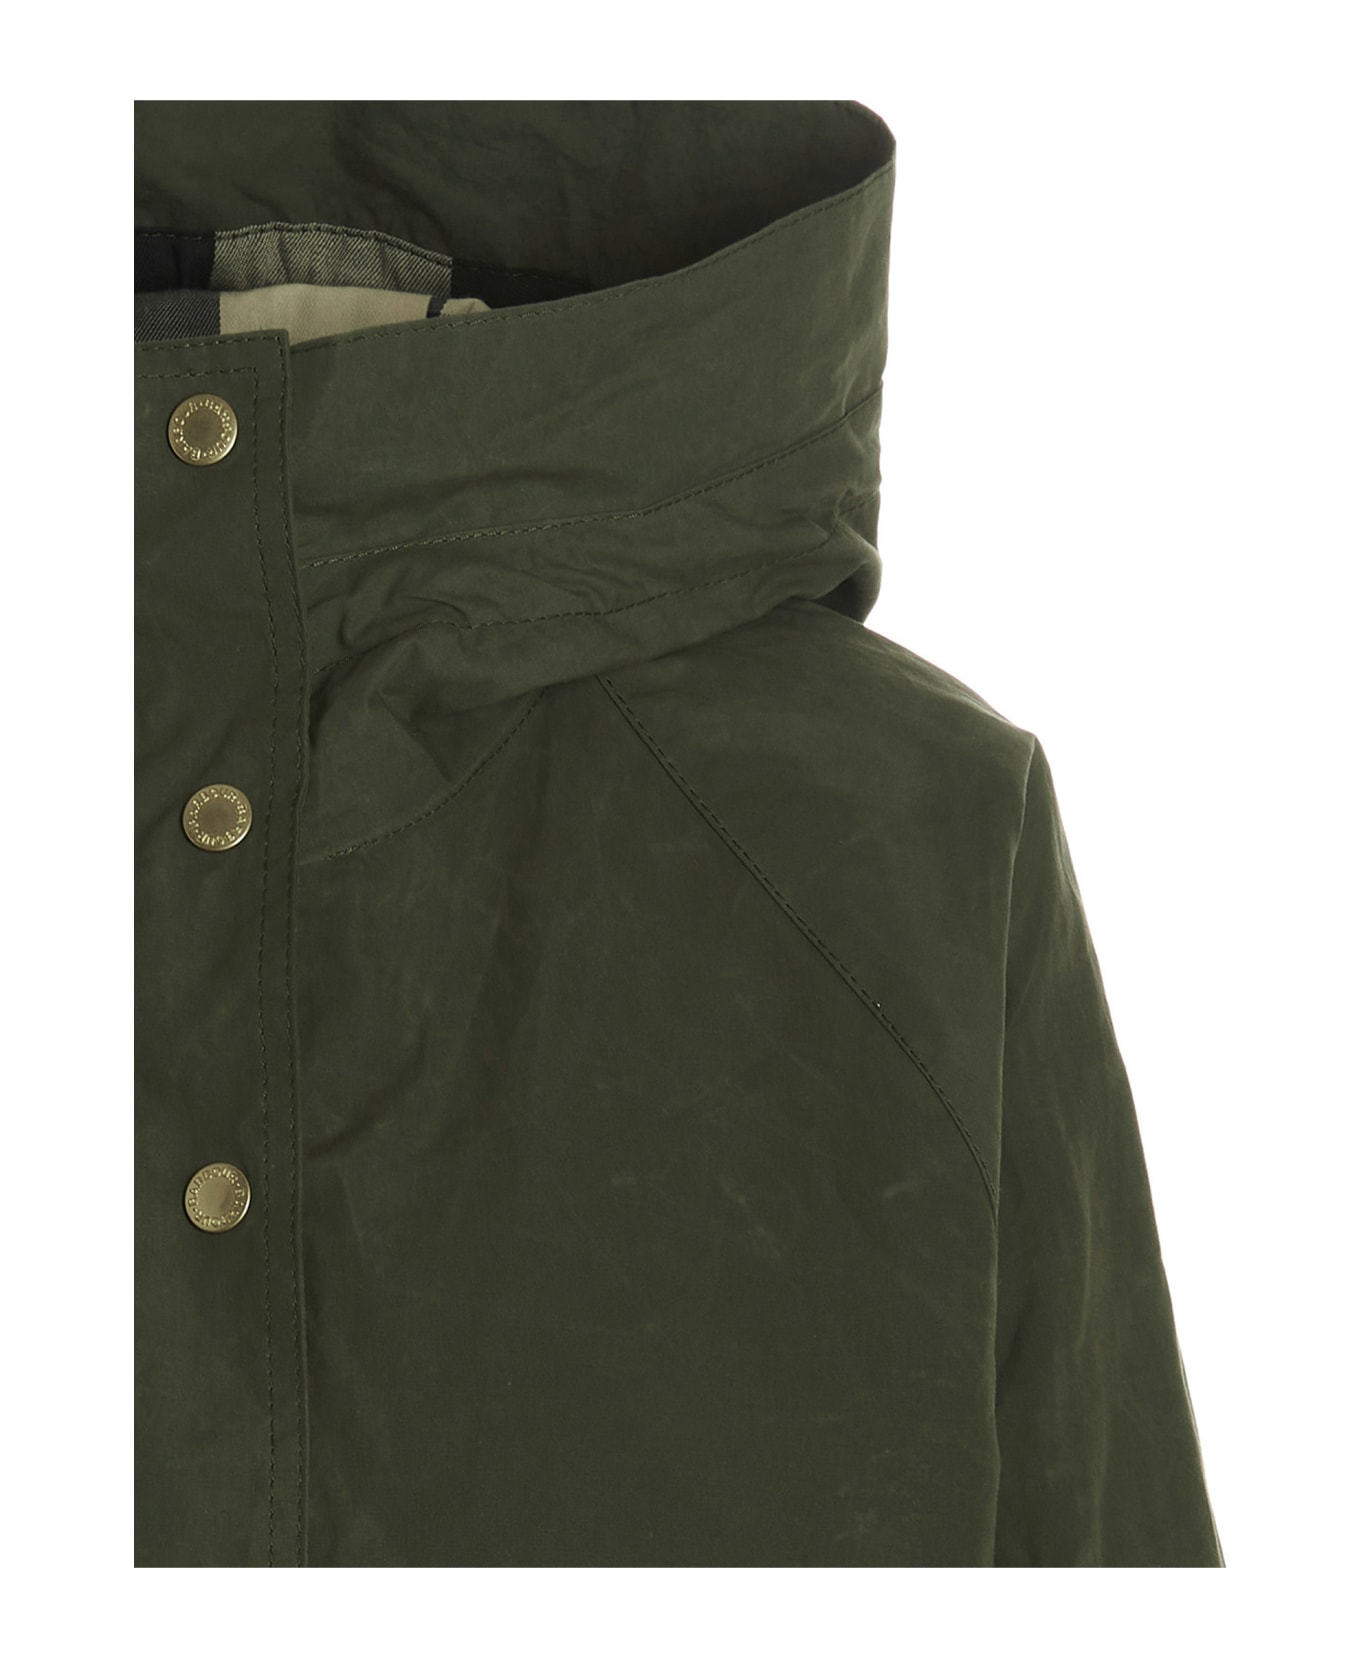 Barbour 'nith' Jacket - Green ジャケット